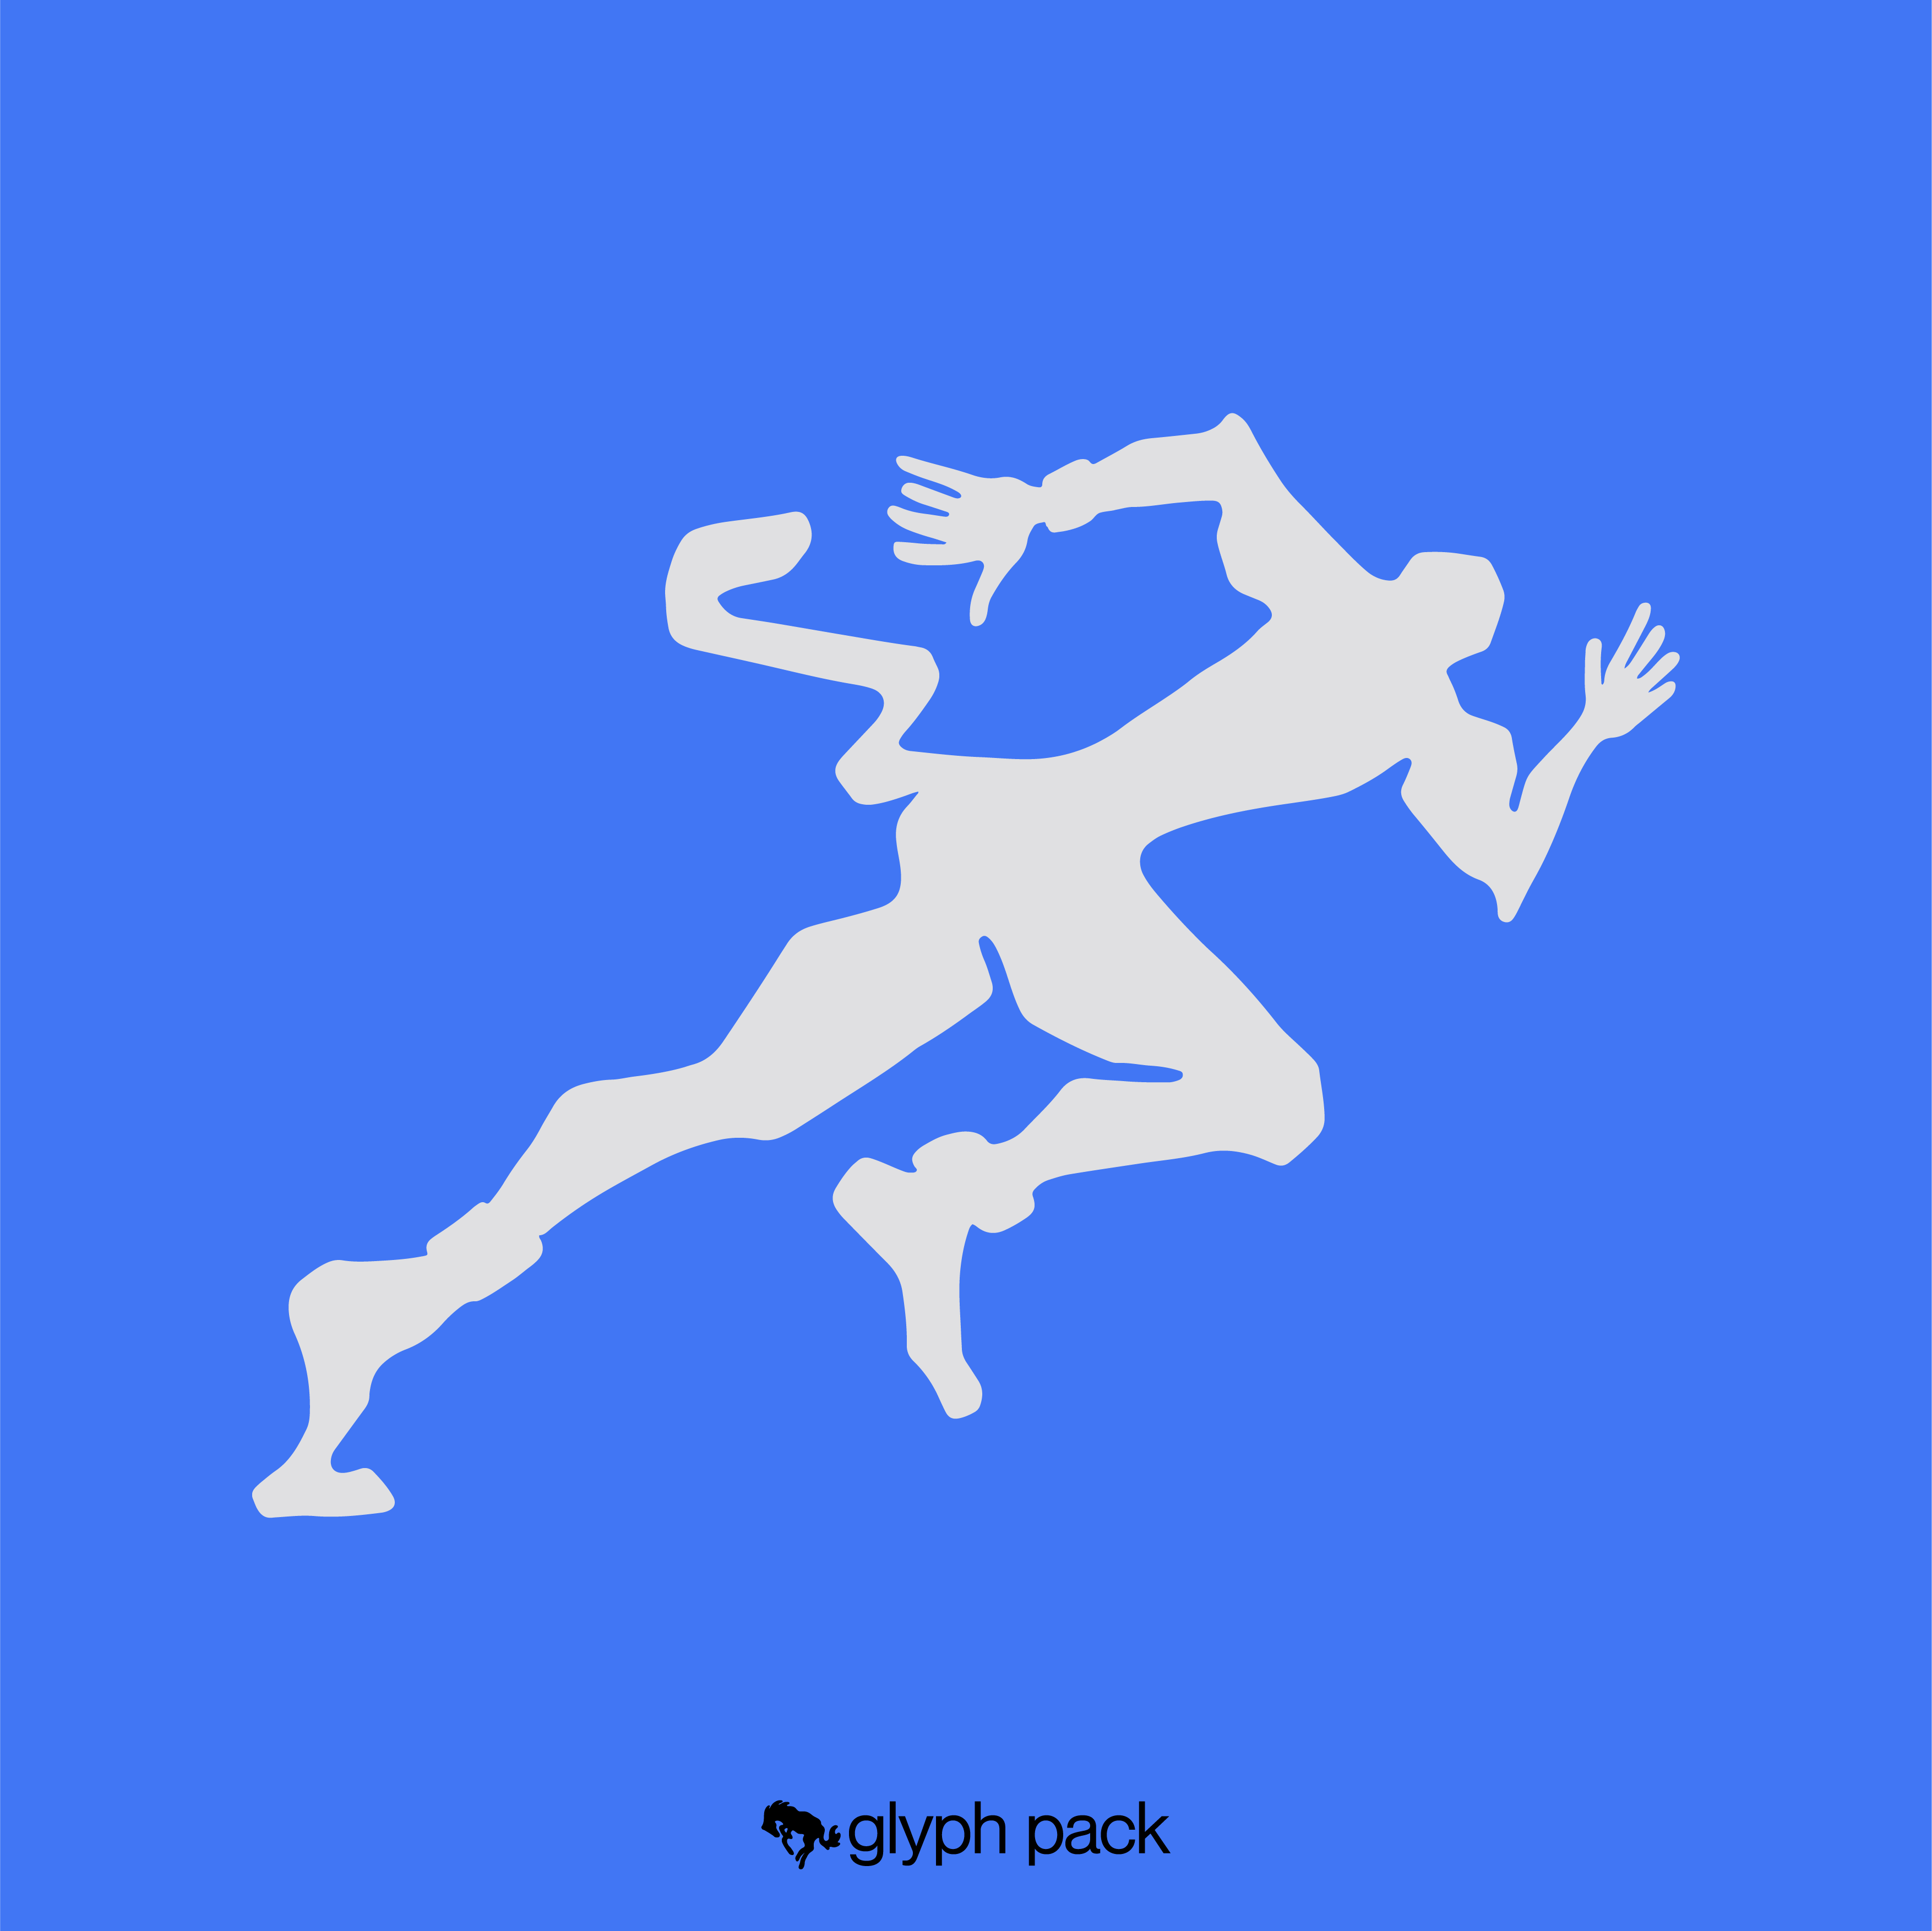 Glyph Pack